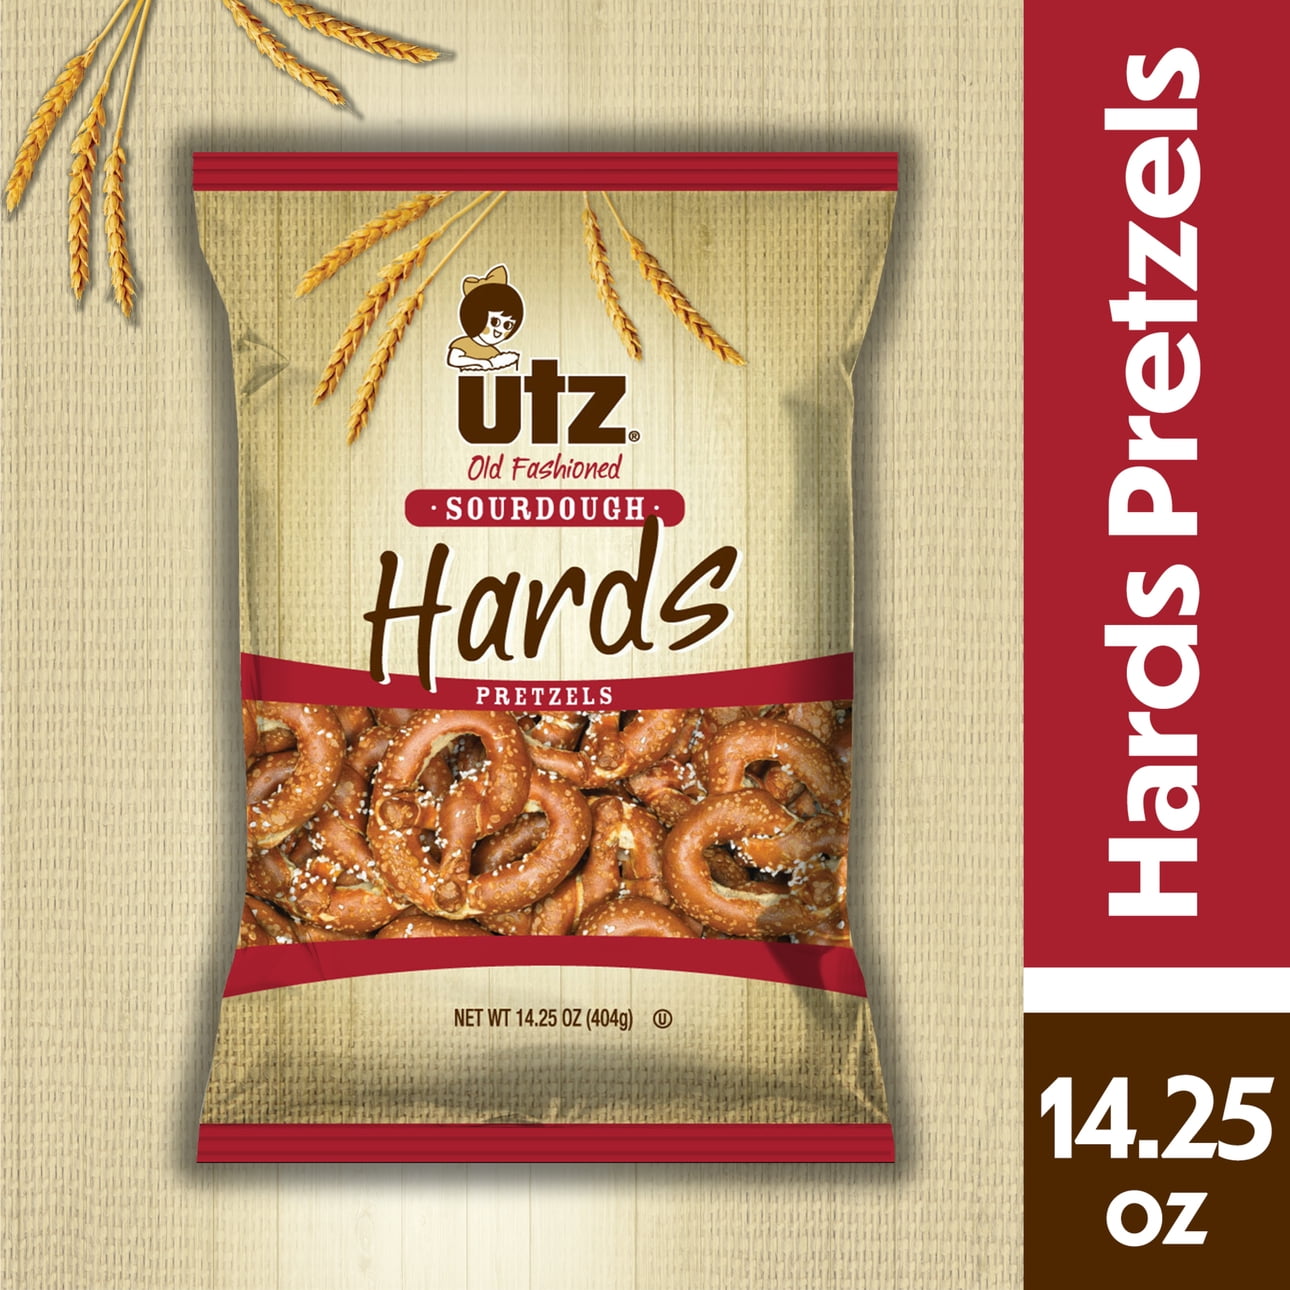 14.25 oz Utz Old Fashioned Sourdough Hards Pretzels